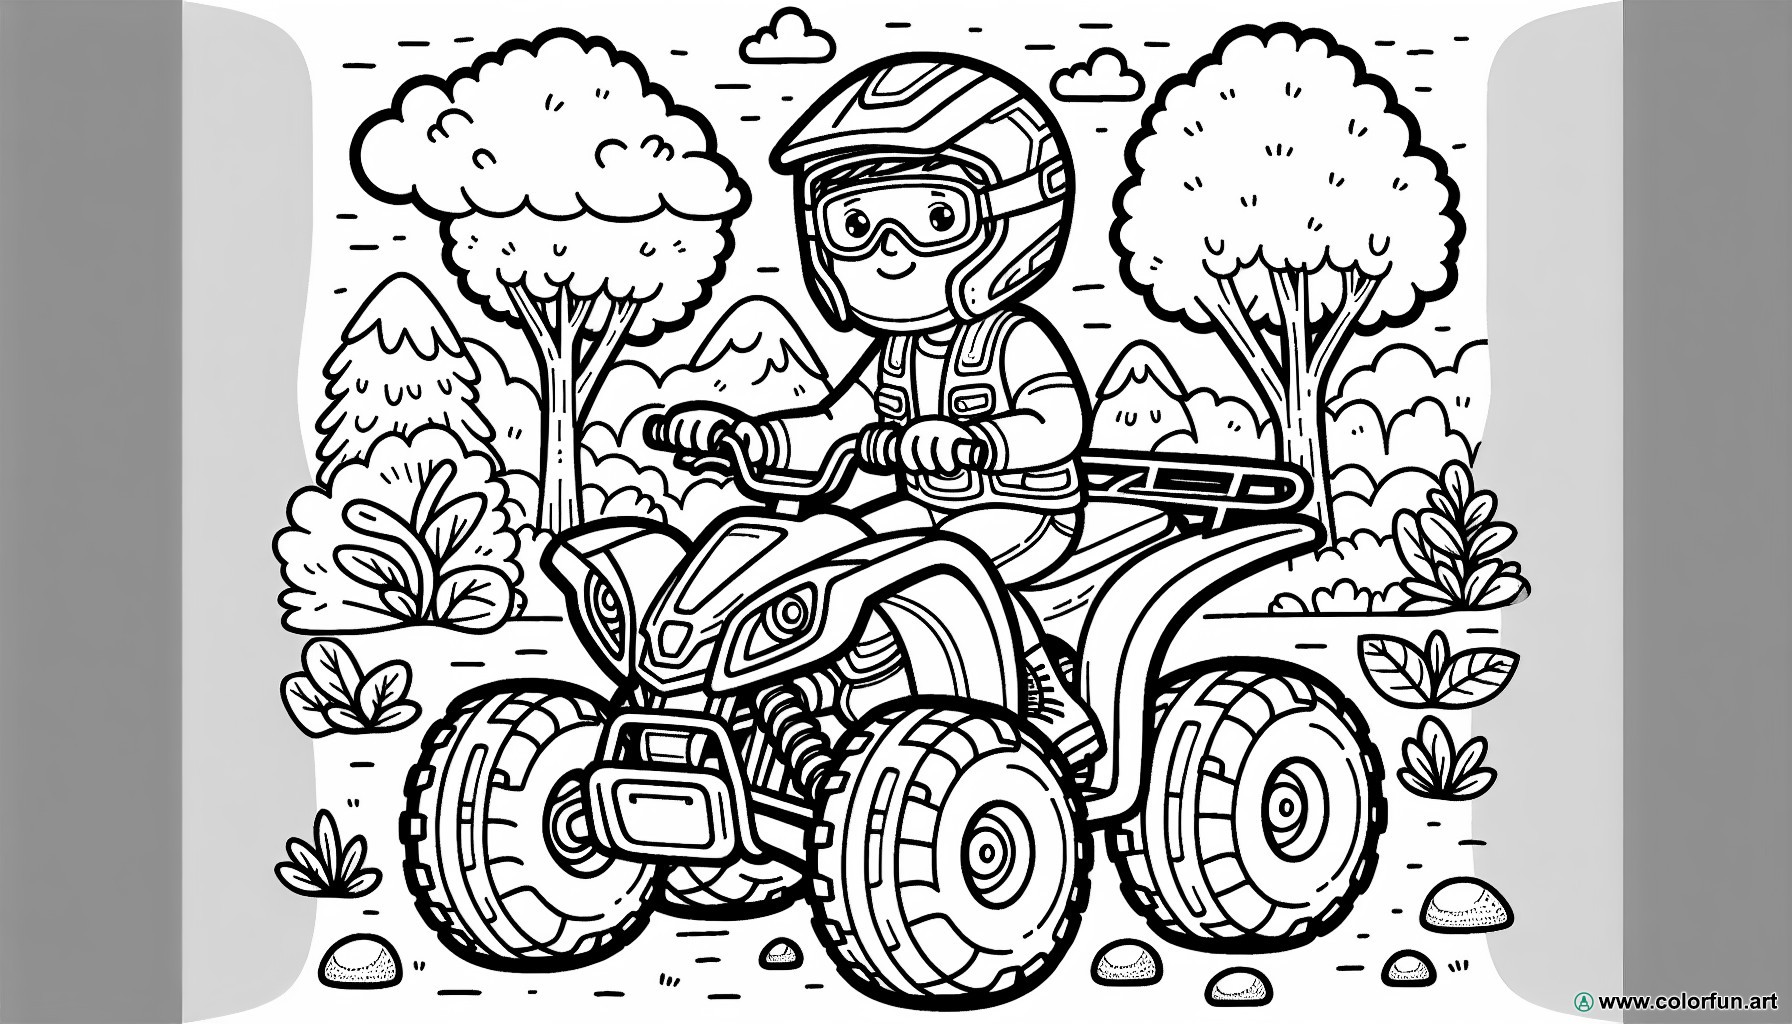 Quad rider coloring page